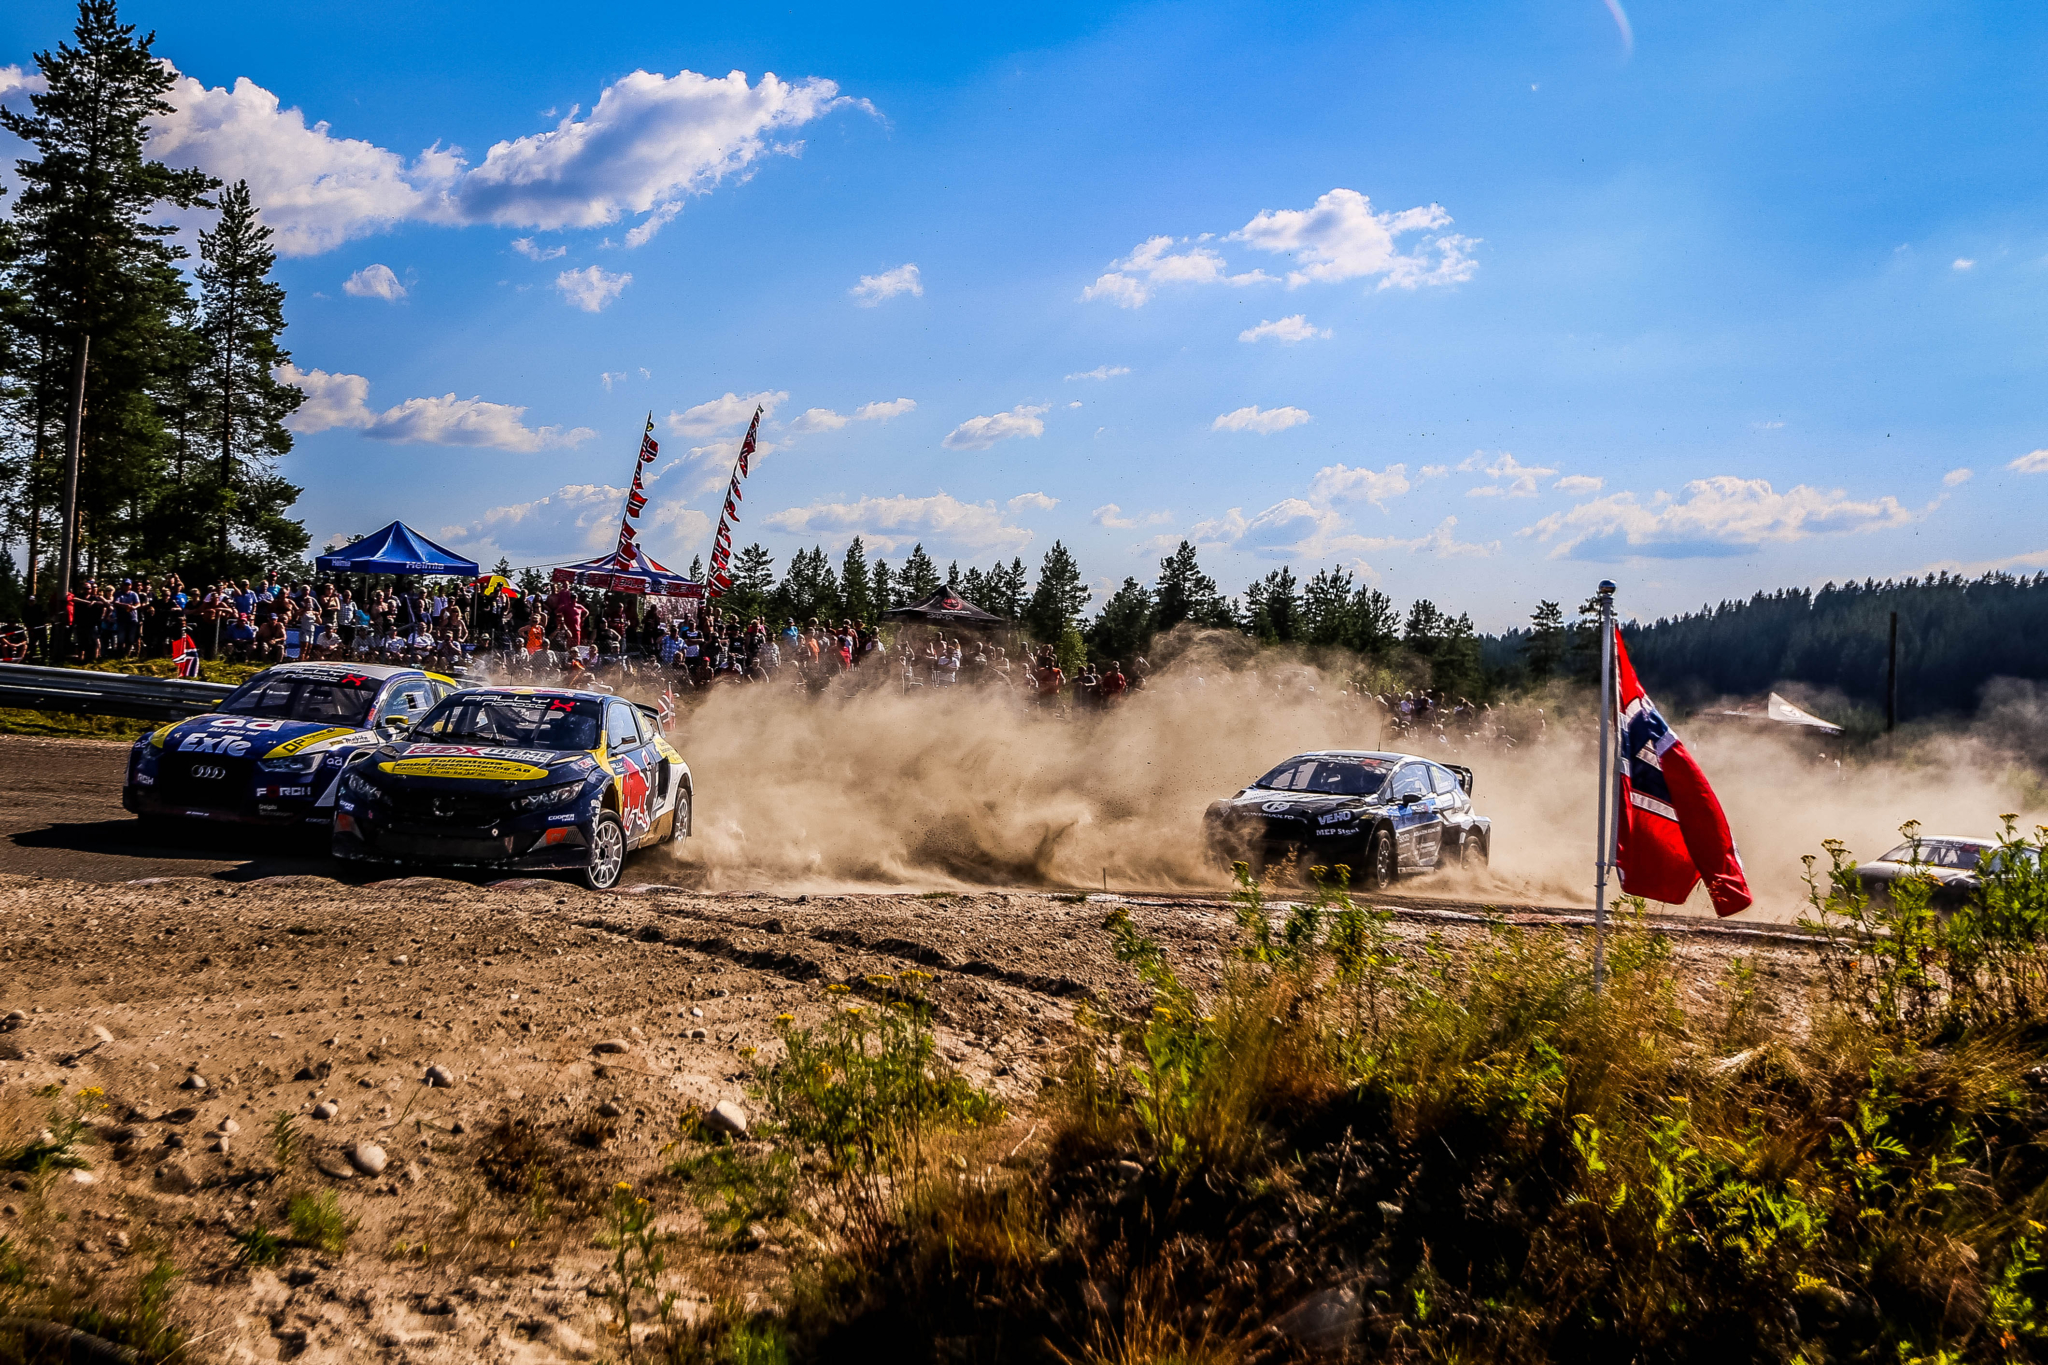 Cooper Tire Europe readies RallyX racing return